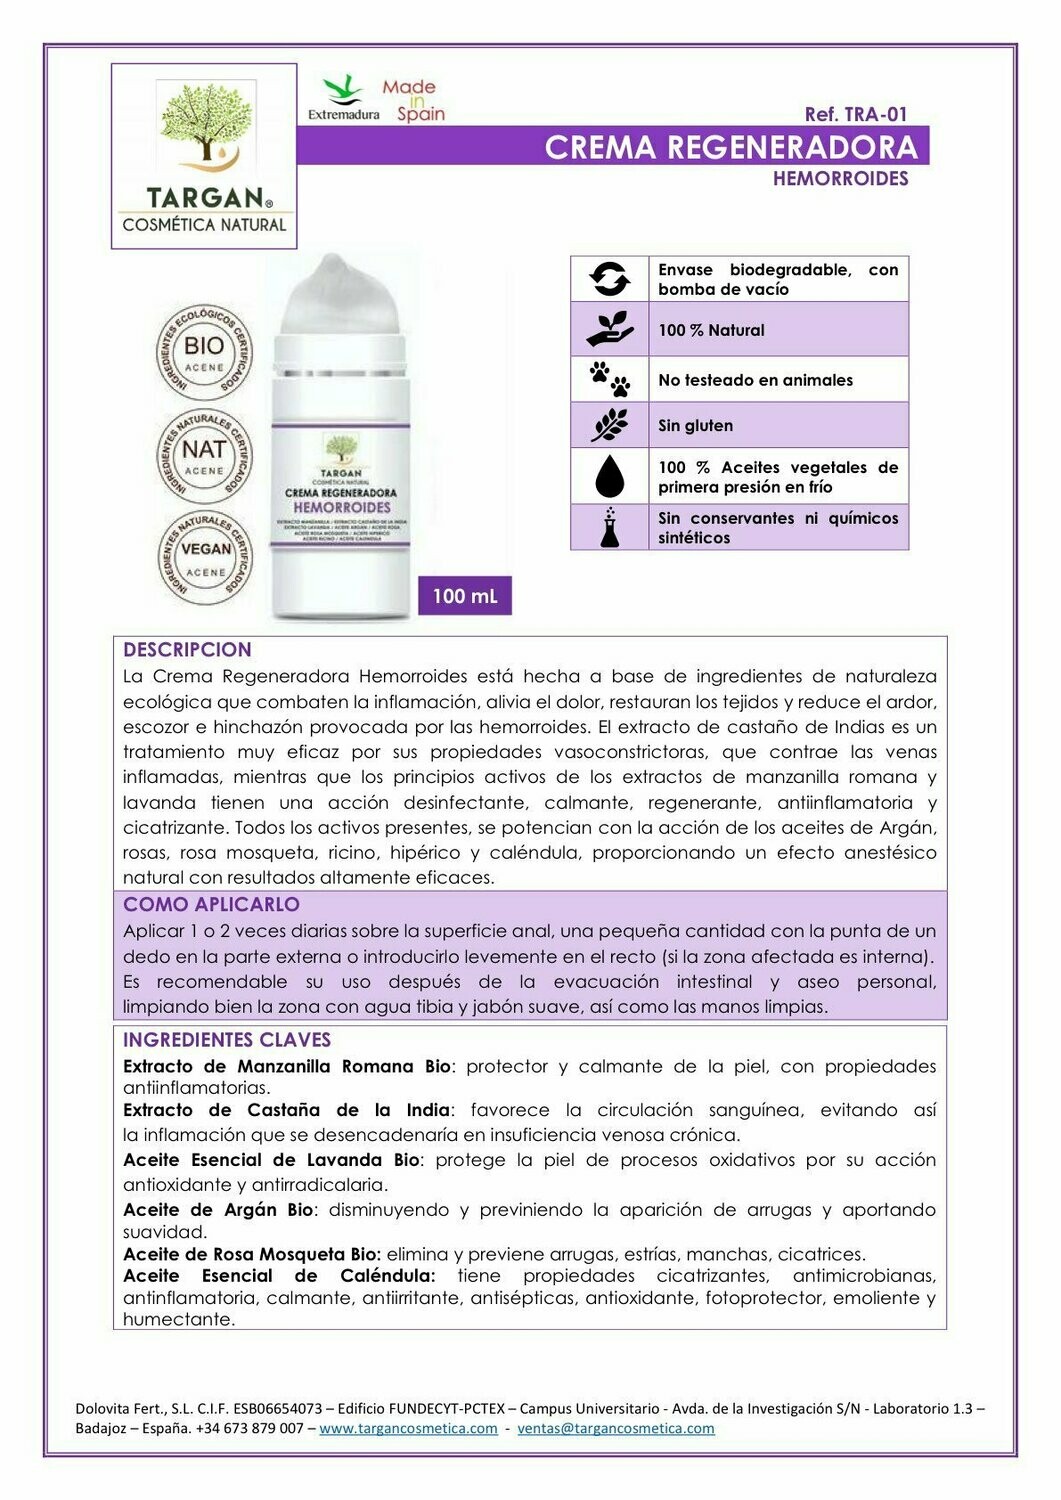 Crema Regeneradora Hemorroides (Ref.TRA-01)